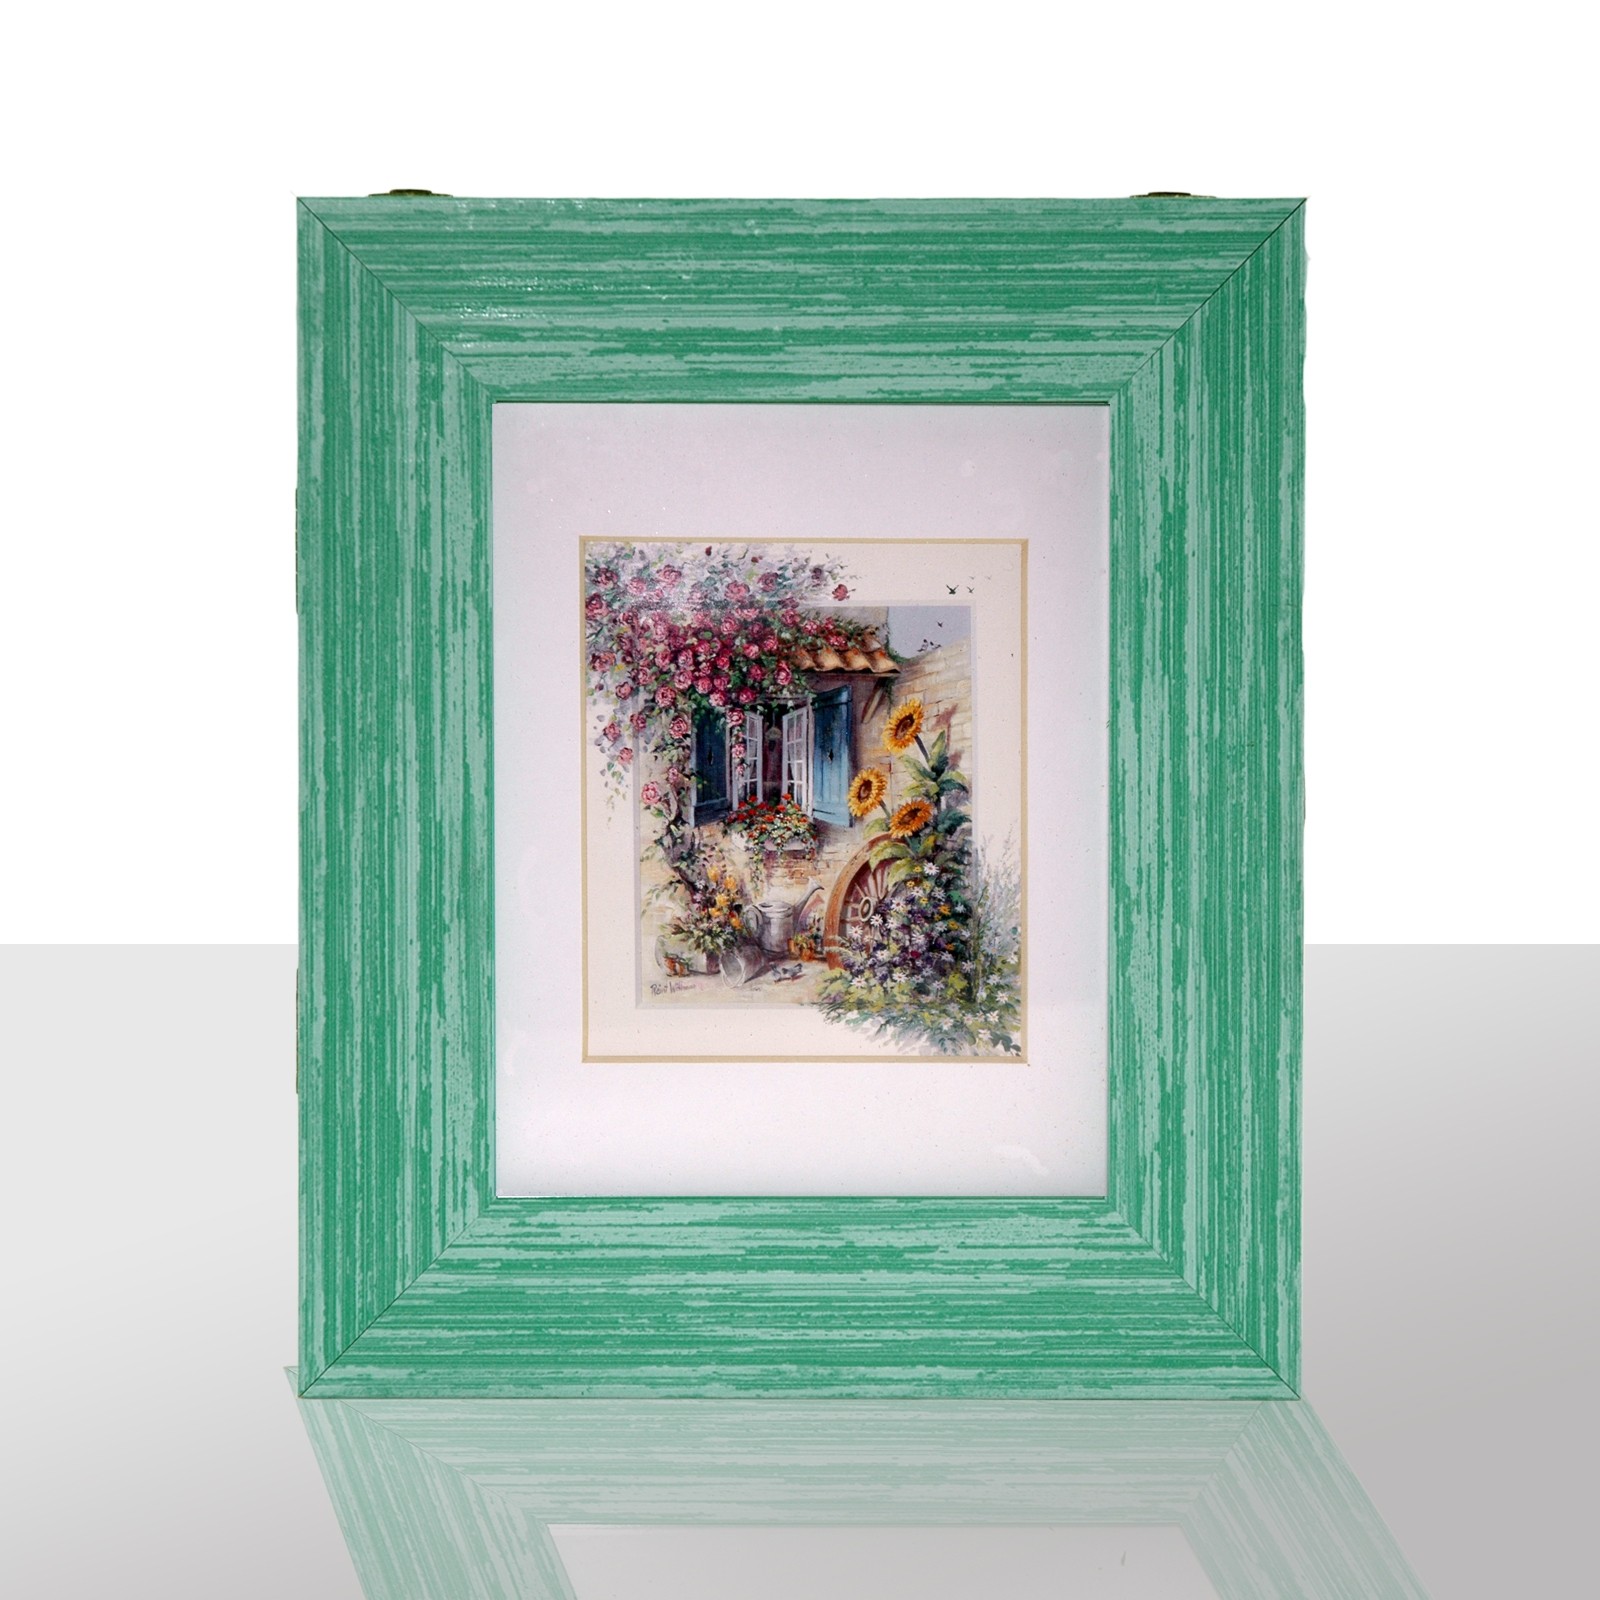 Clave caja verde, ventana m. Flores LxAxF 27x22x6 cm, retrato